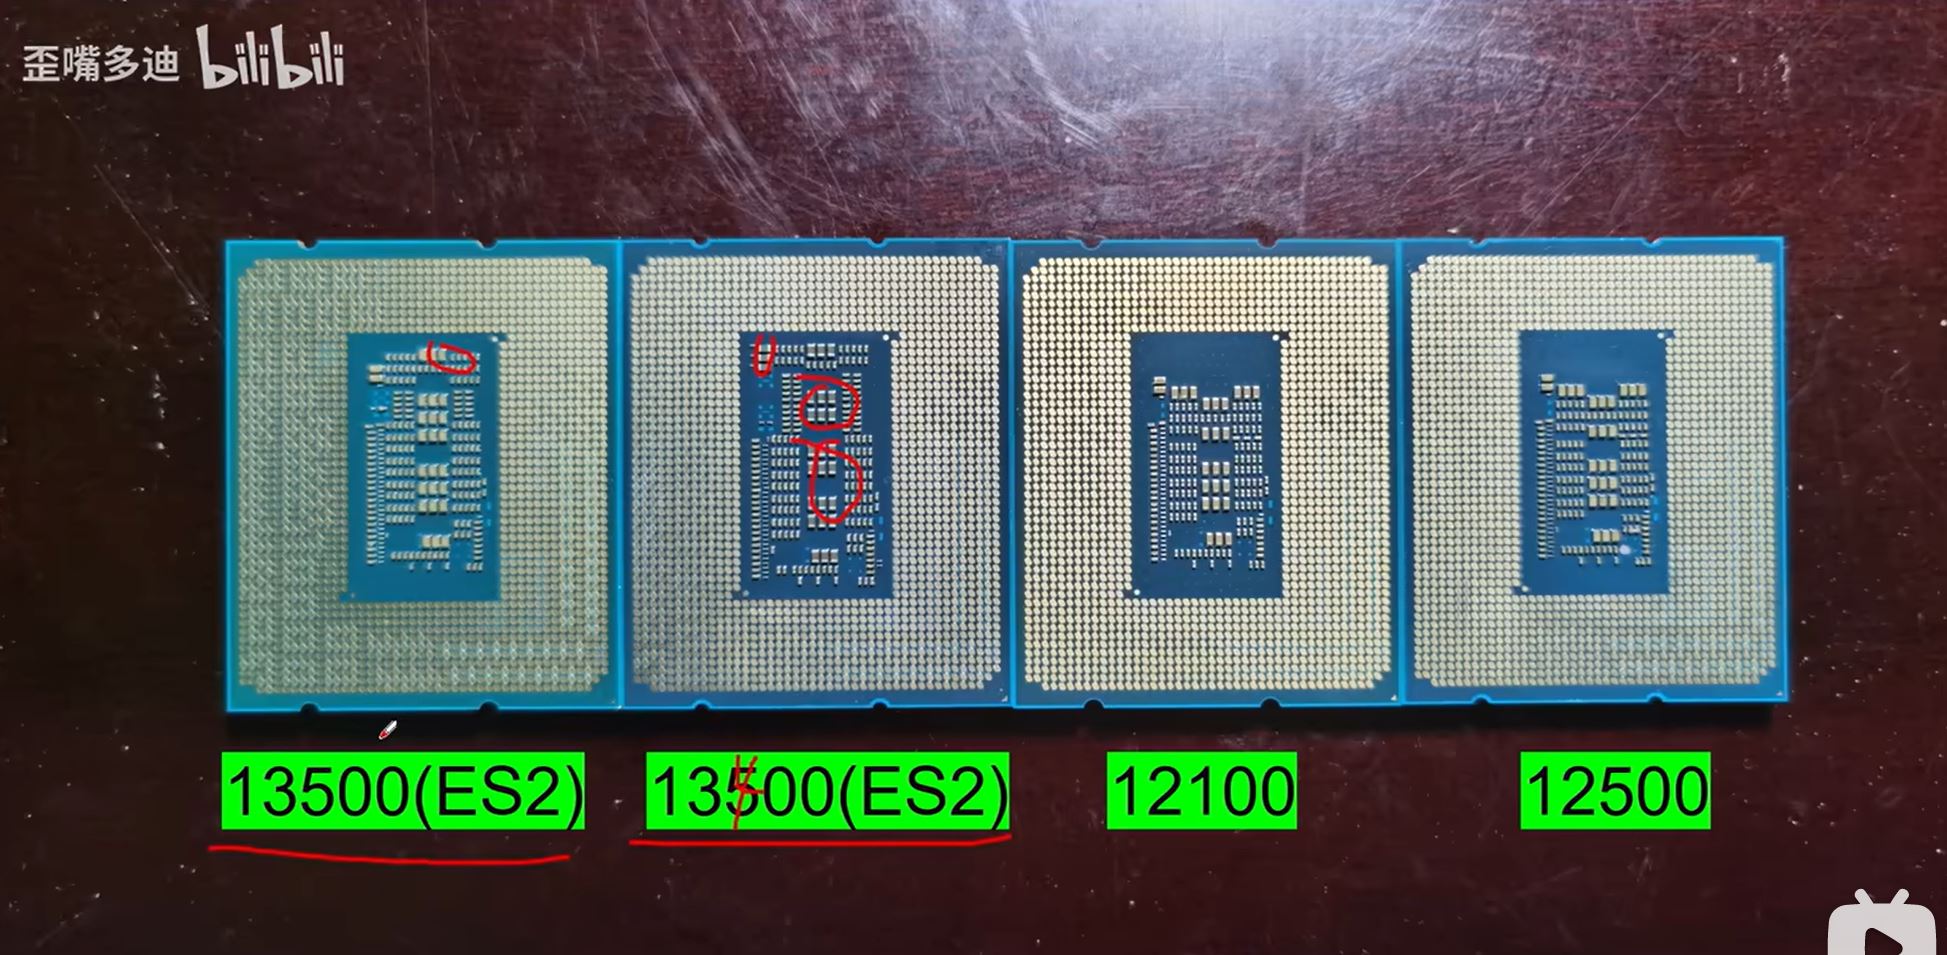 Intel Core i5-13600K, Core i5-13500, Core i5-13400 CPU Benchmarks